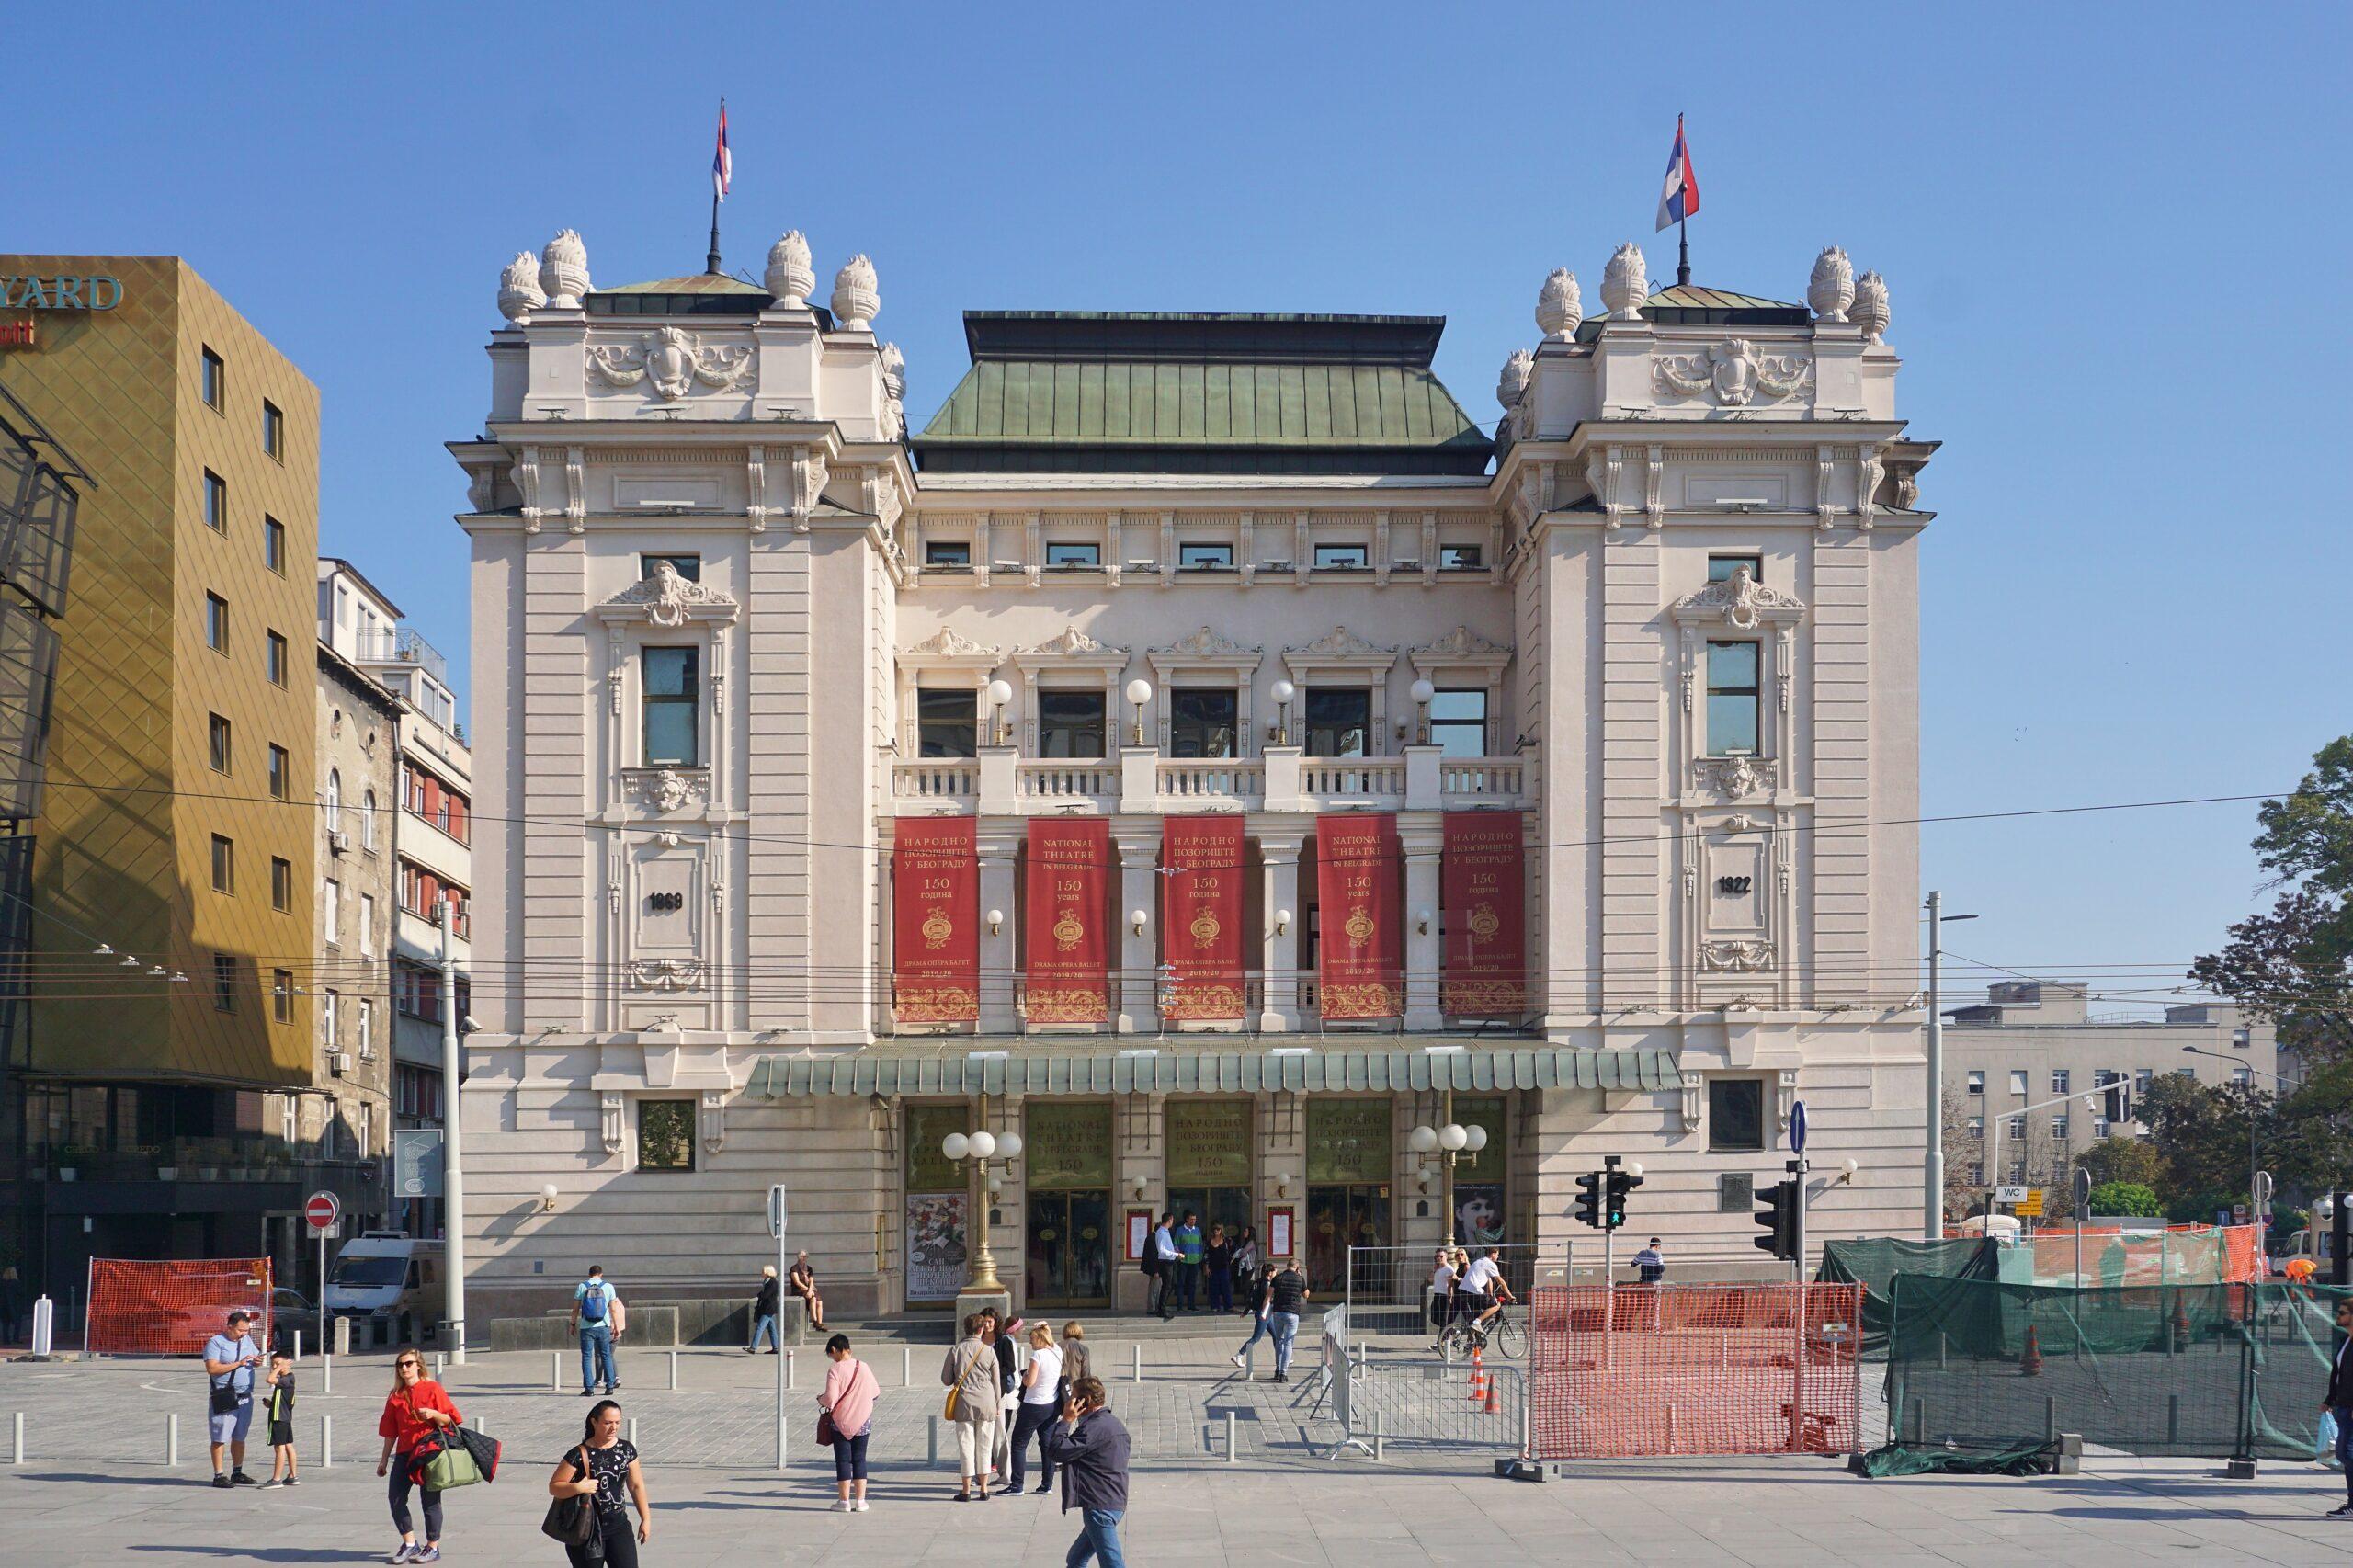 The Belgrade Opera